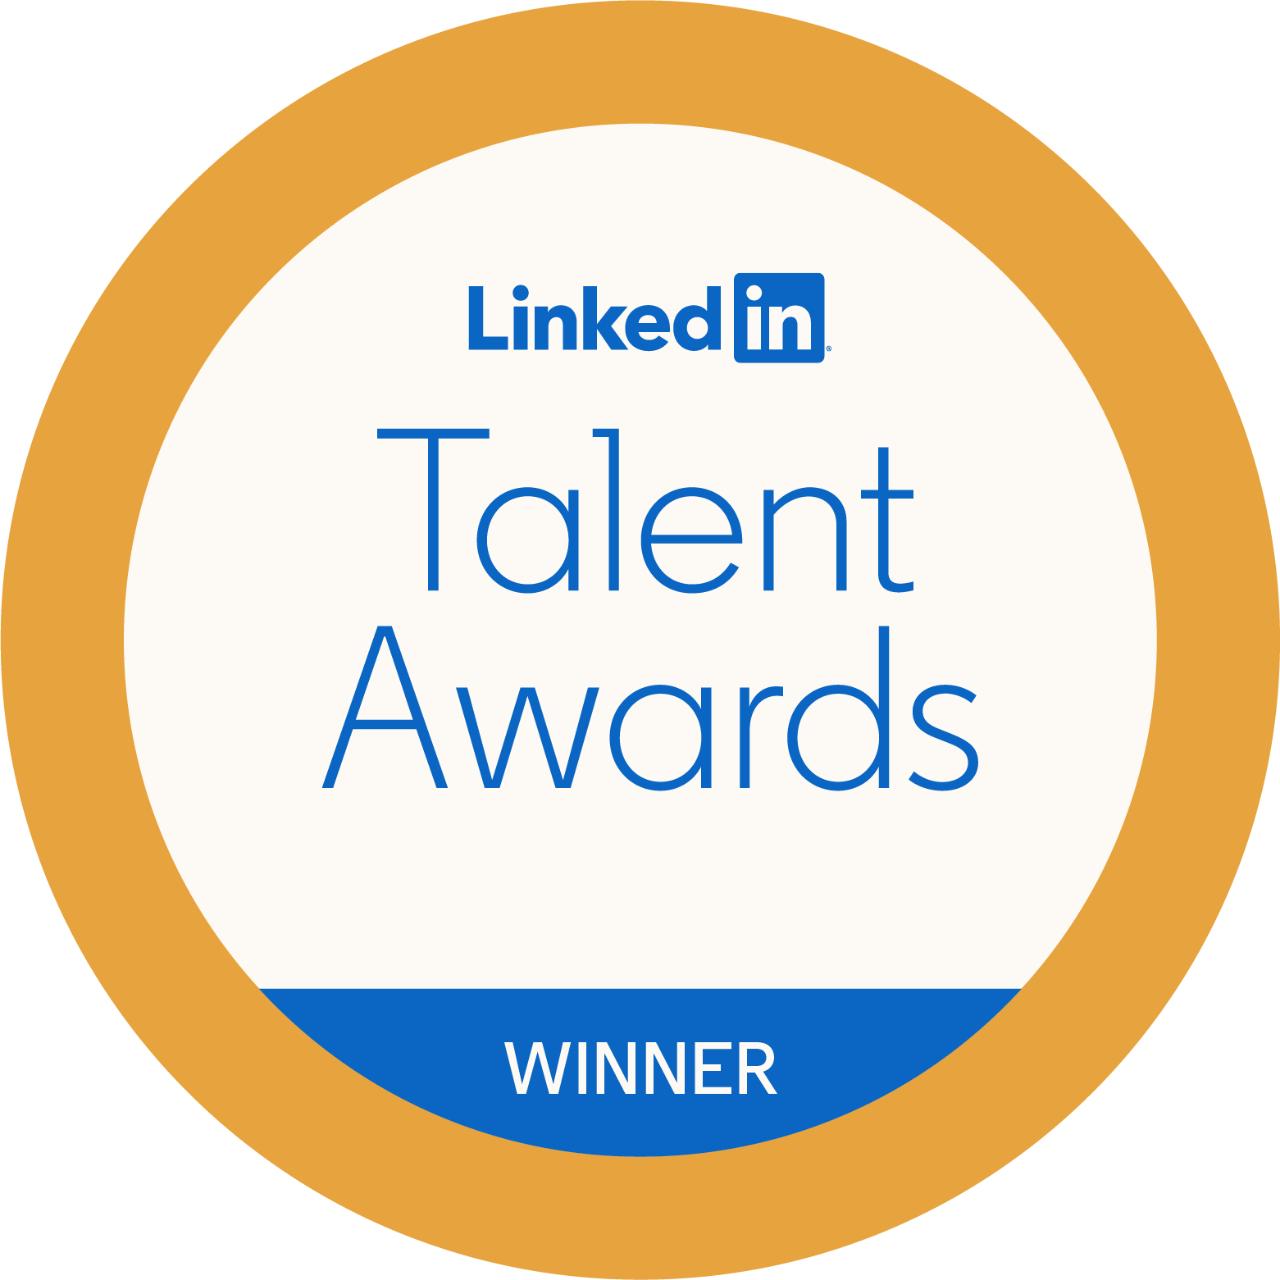  LinkedIn Talent Awards winner.